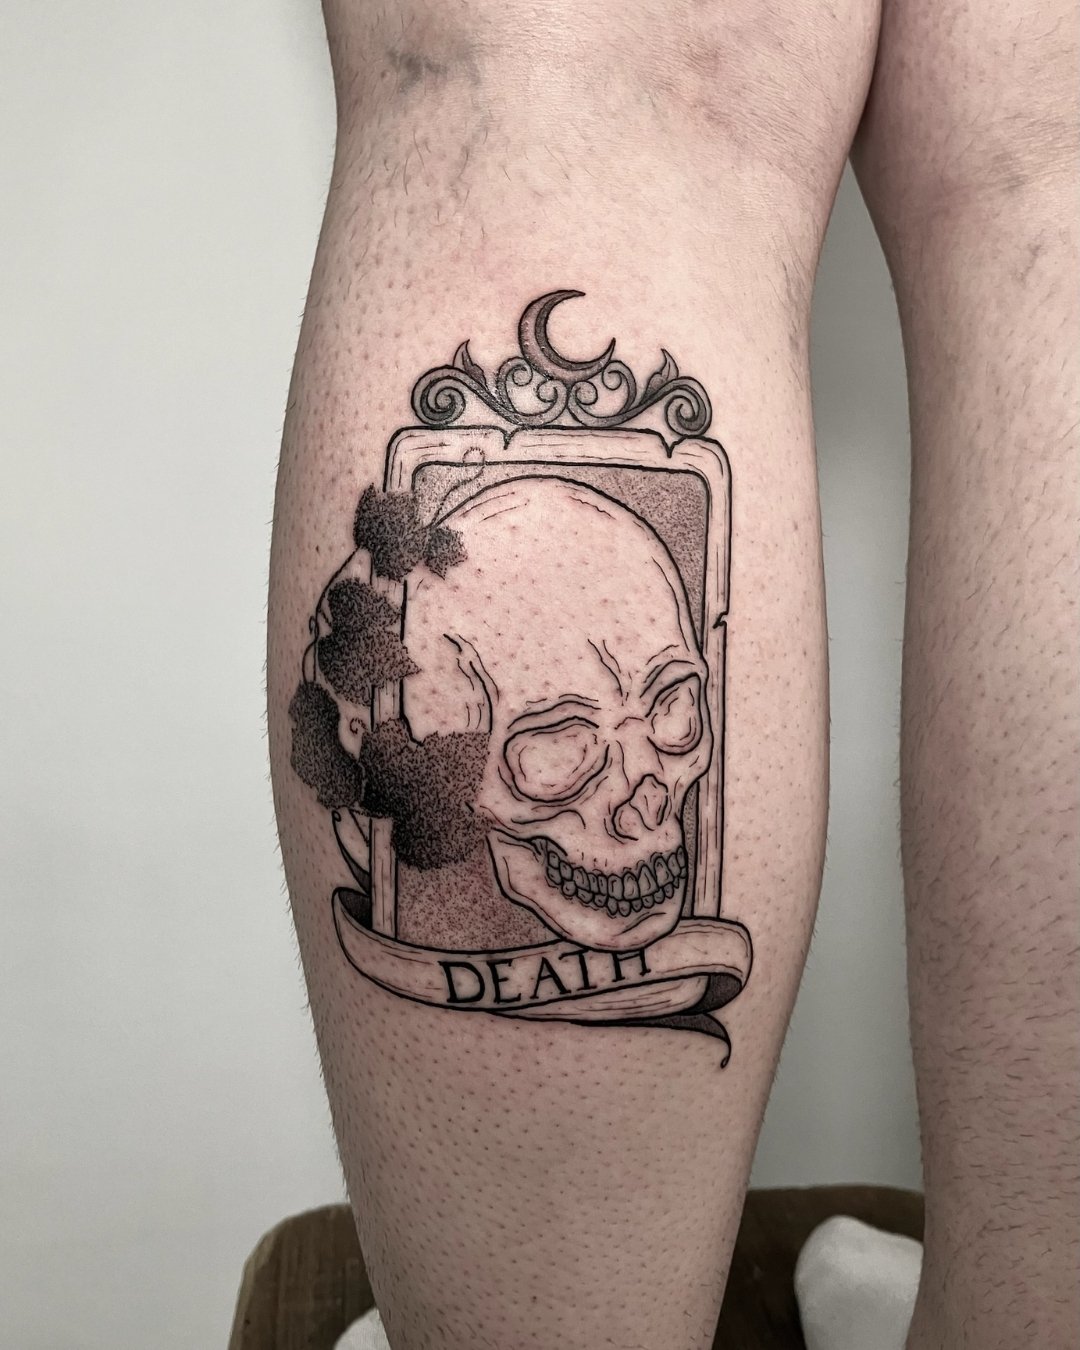 Flash - Skull 💀
- @madonyourskin - 🃏
&bull;
&bull;
&bull;
# #ink #lyontattoo #tatouage #tattoo #mado #card #skull